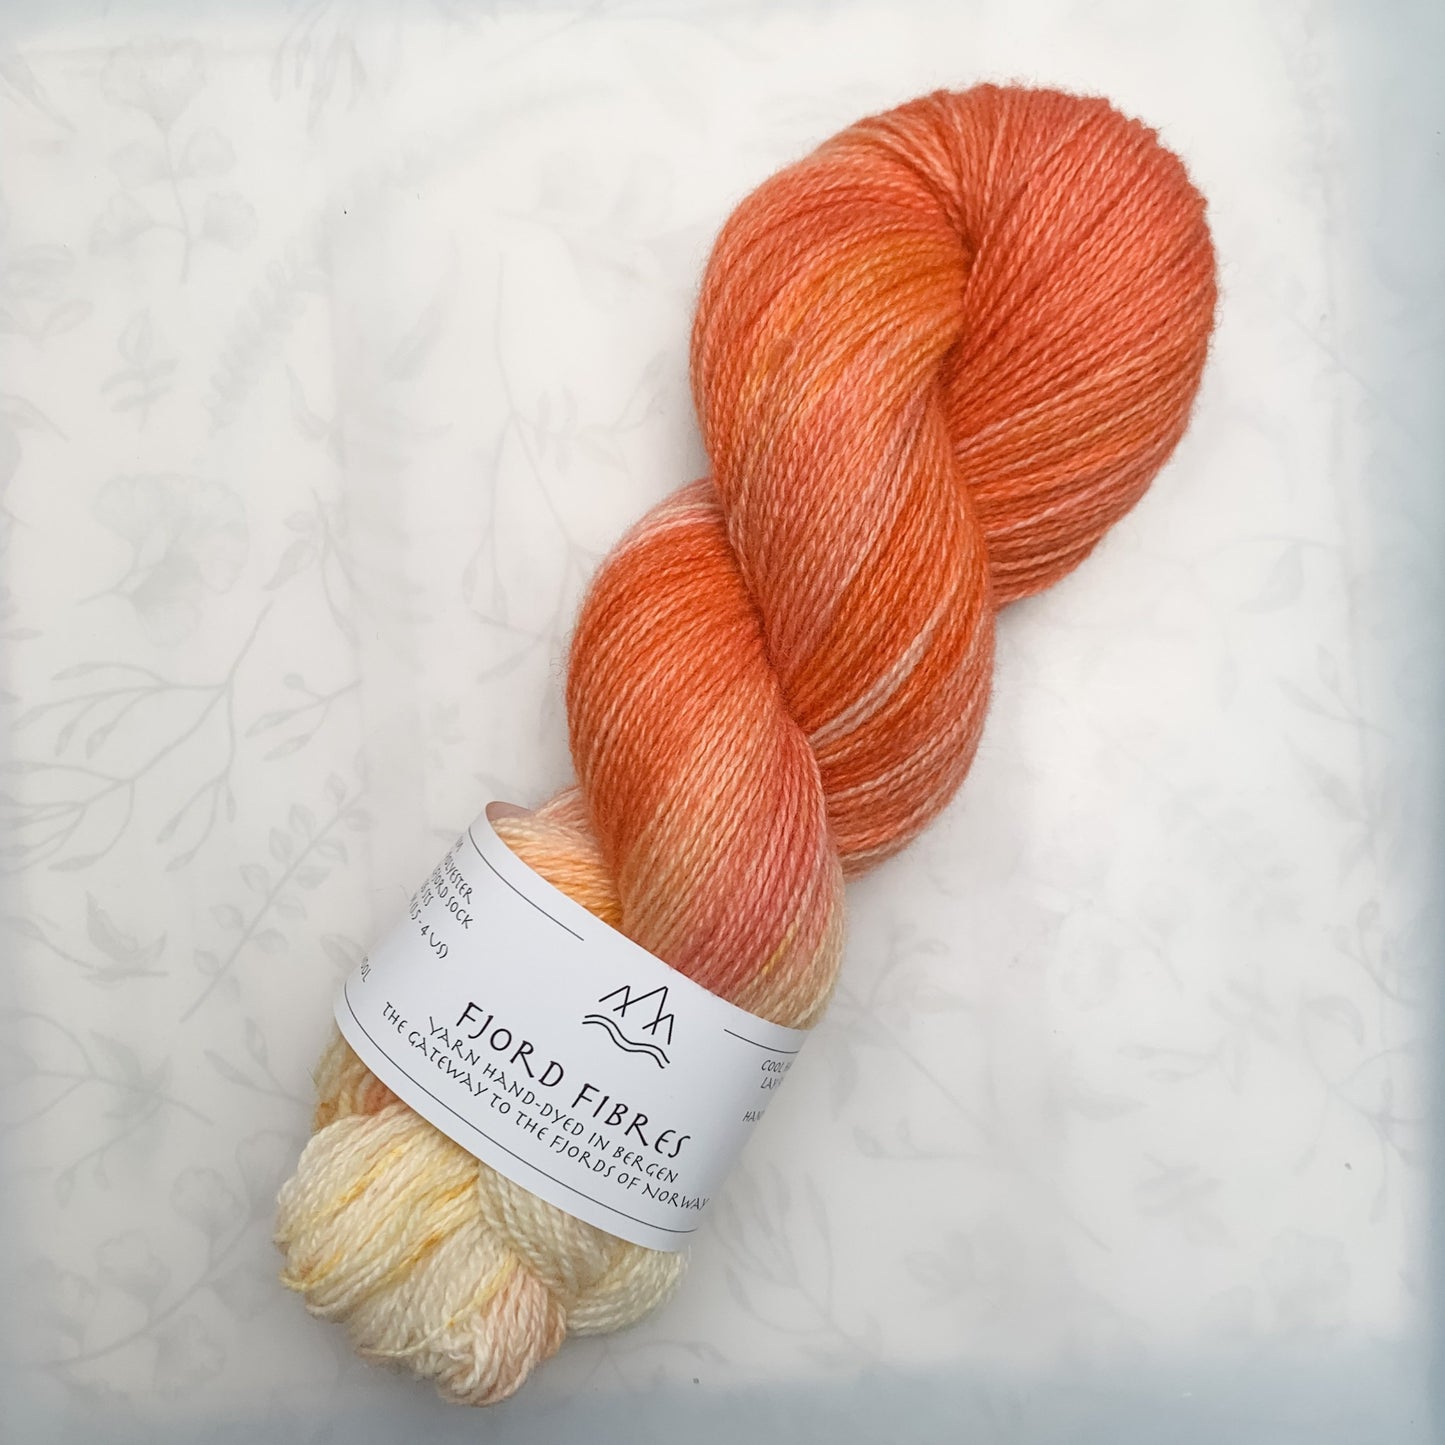 Sunset - Trollfjord sock - Variegated Yarn - Hand dyed yarn